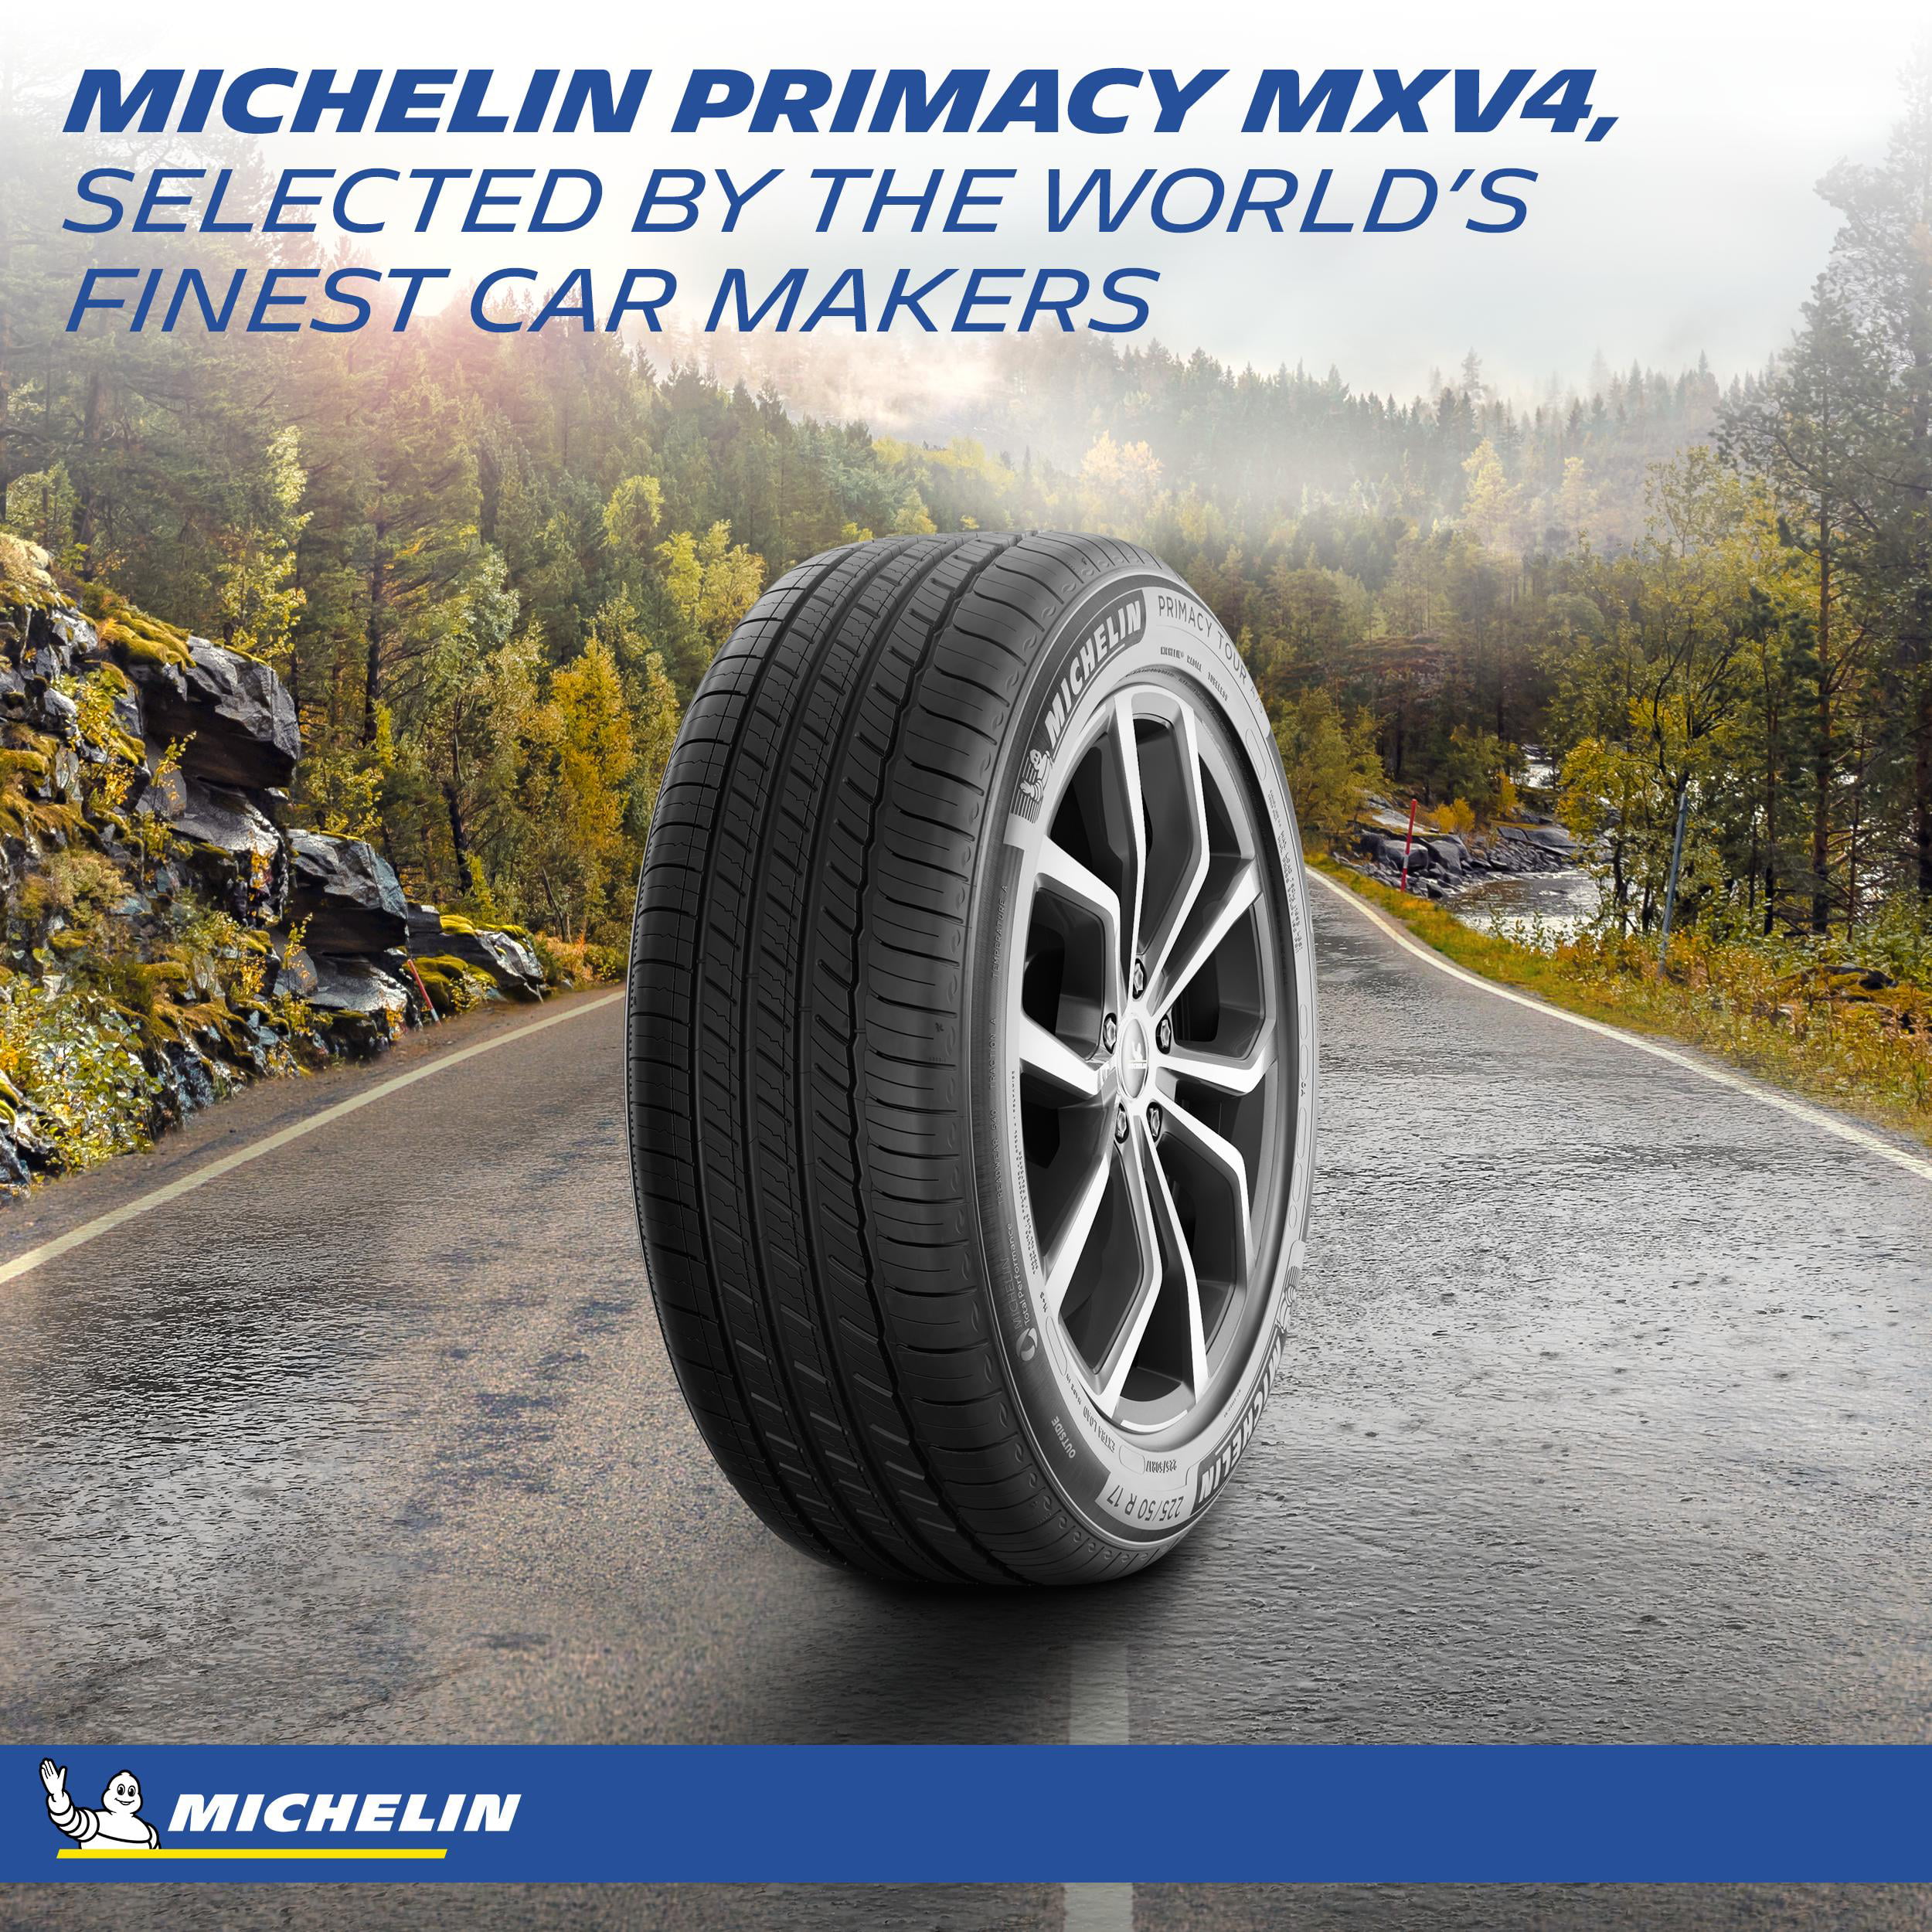 Michelin Primacy MXV4 205/55R16 89 H Tire.